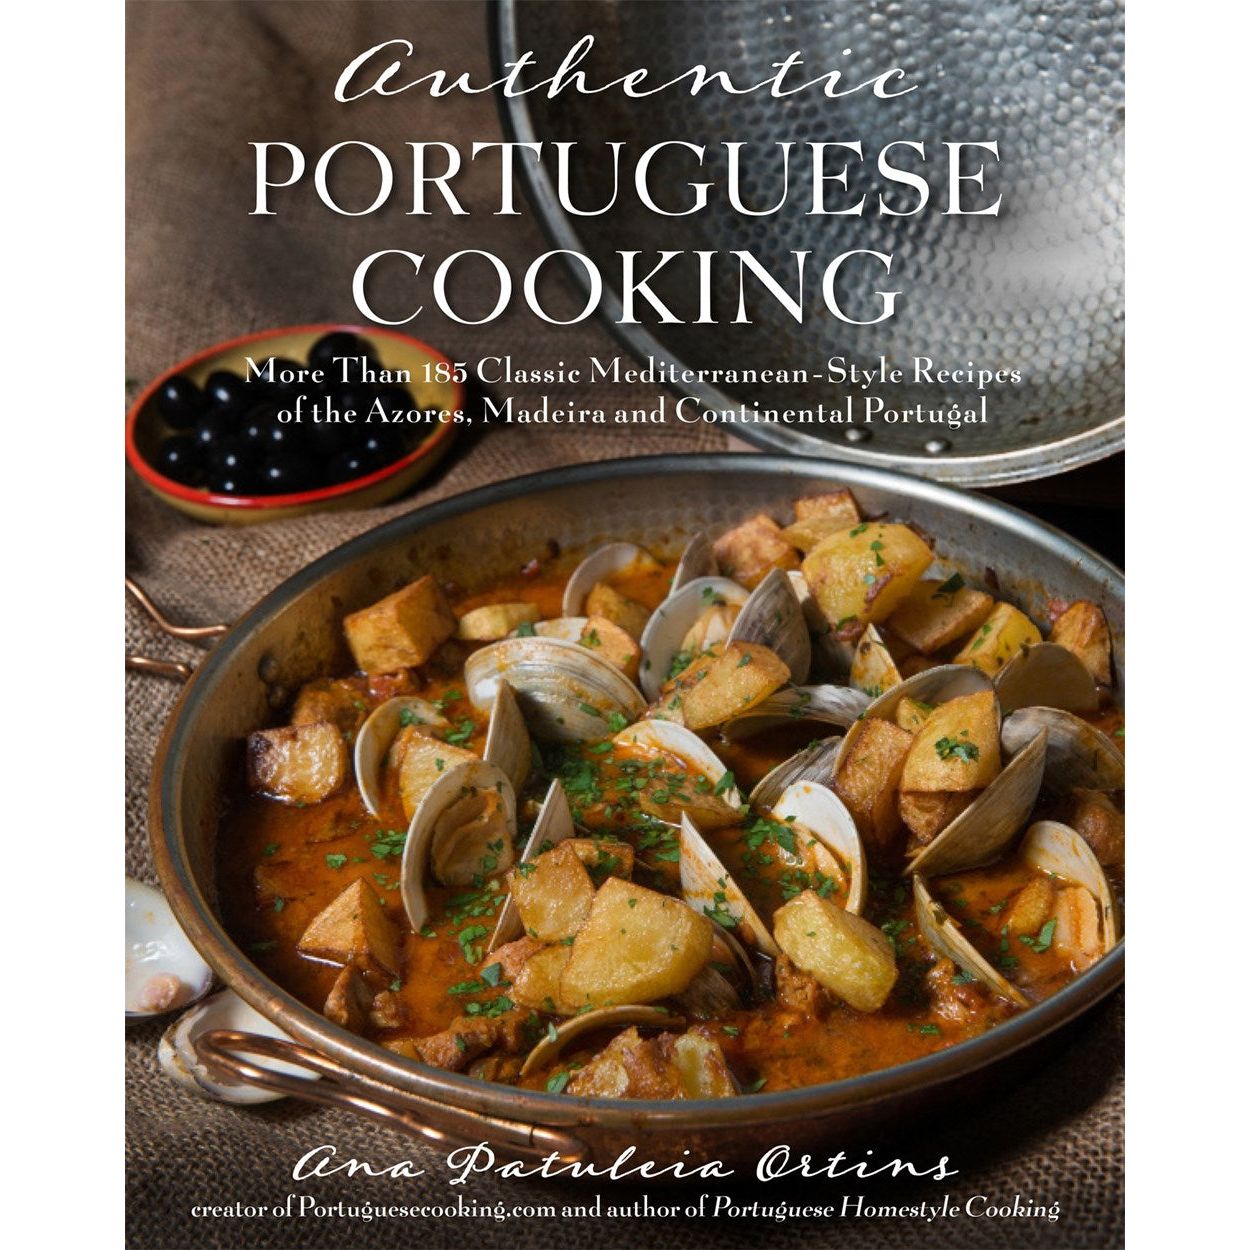 Authentic Portuguese Cooking (Ana Patuleia Ortins)